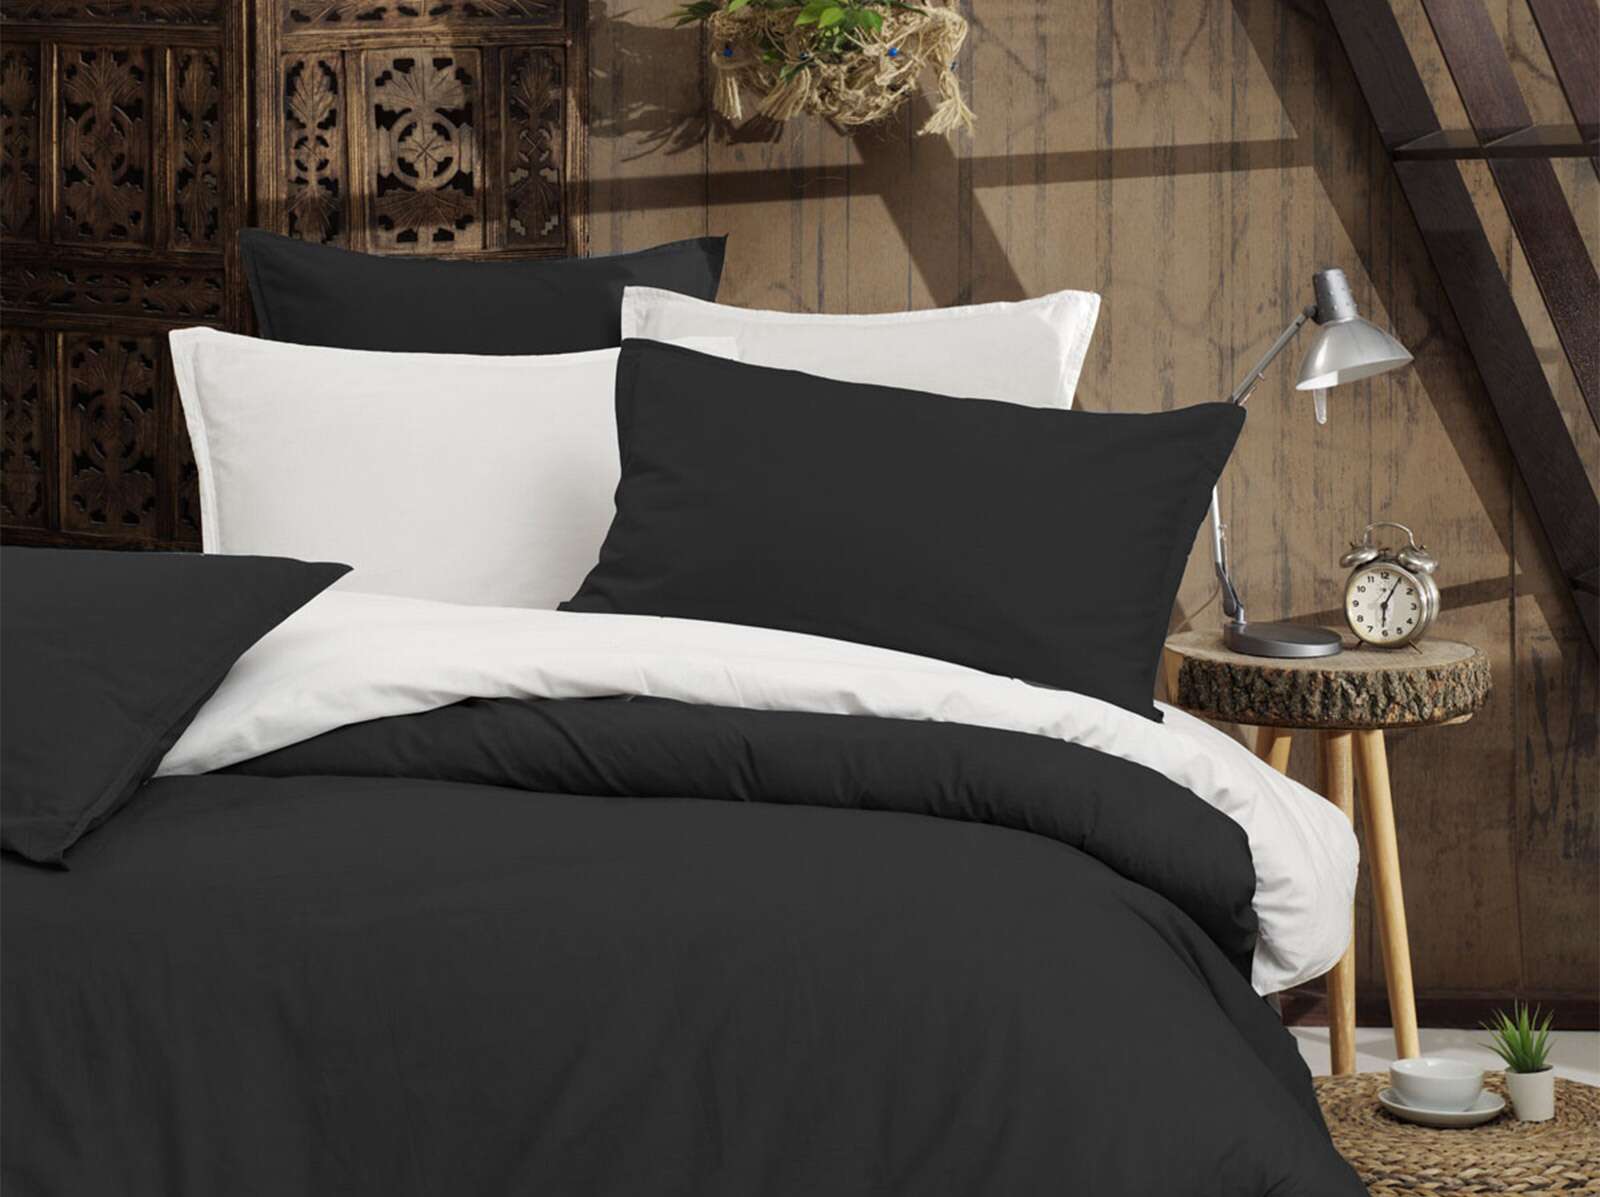 Enhance your bedroom with Sensei Maison duvet covers